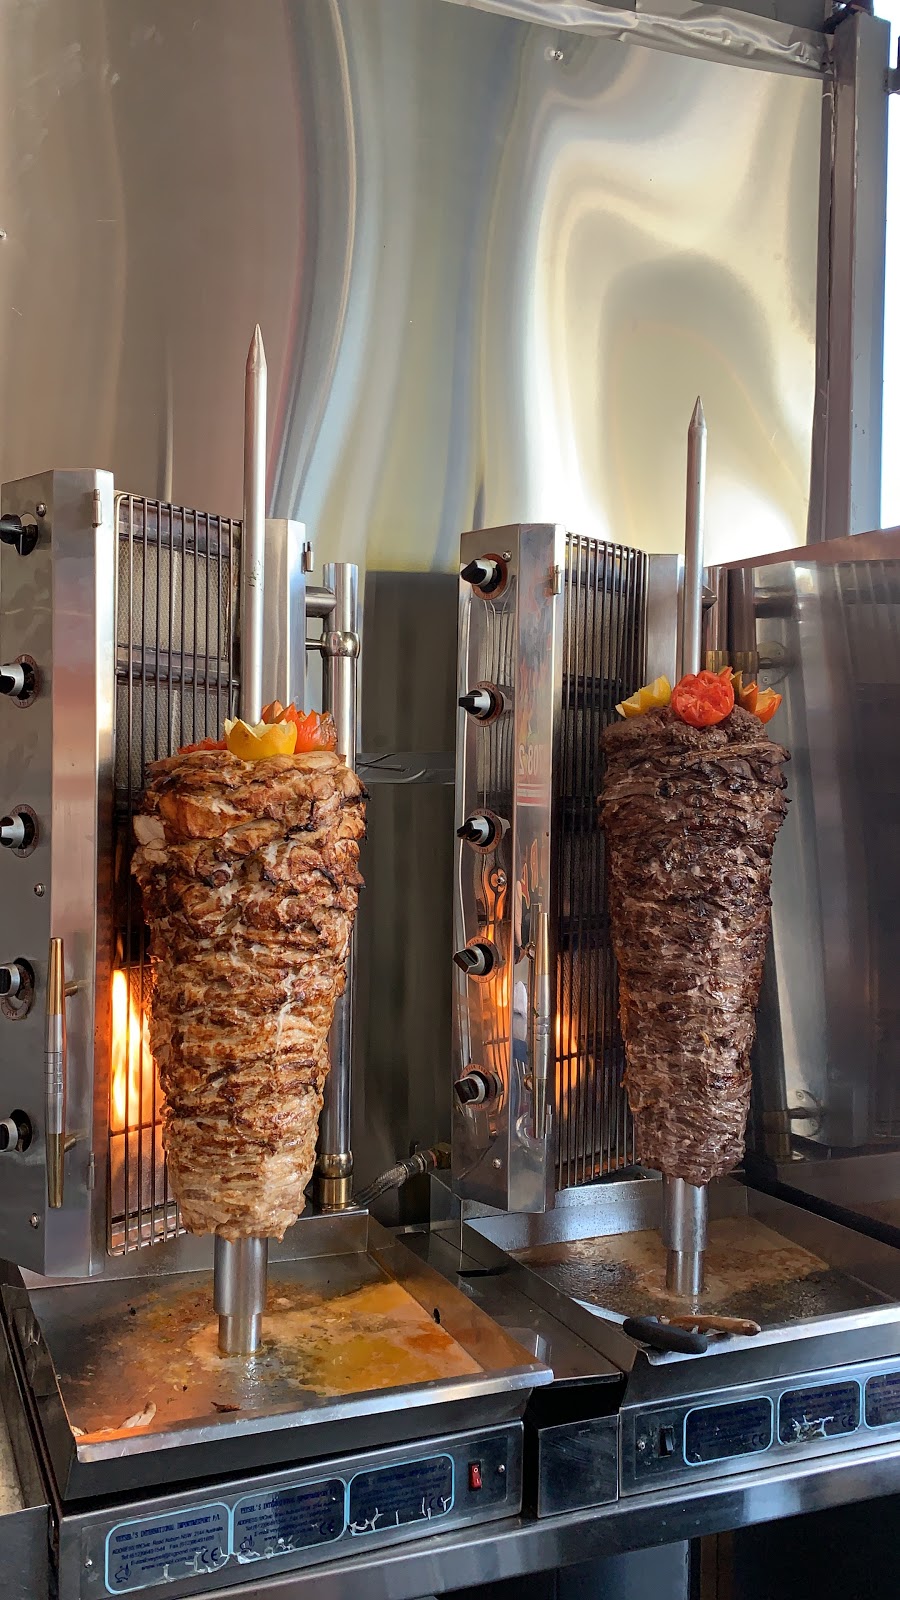 Beirut Shawarma Condell Park | restaurant | 132-134 Edgar St, Condell Park NSW 2200, Australia | 0416661444 OR +61 416 661 444